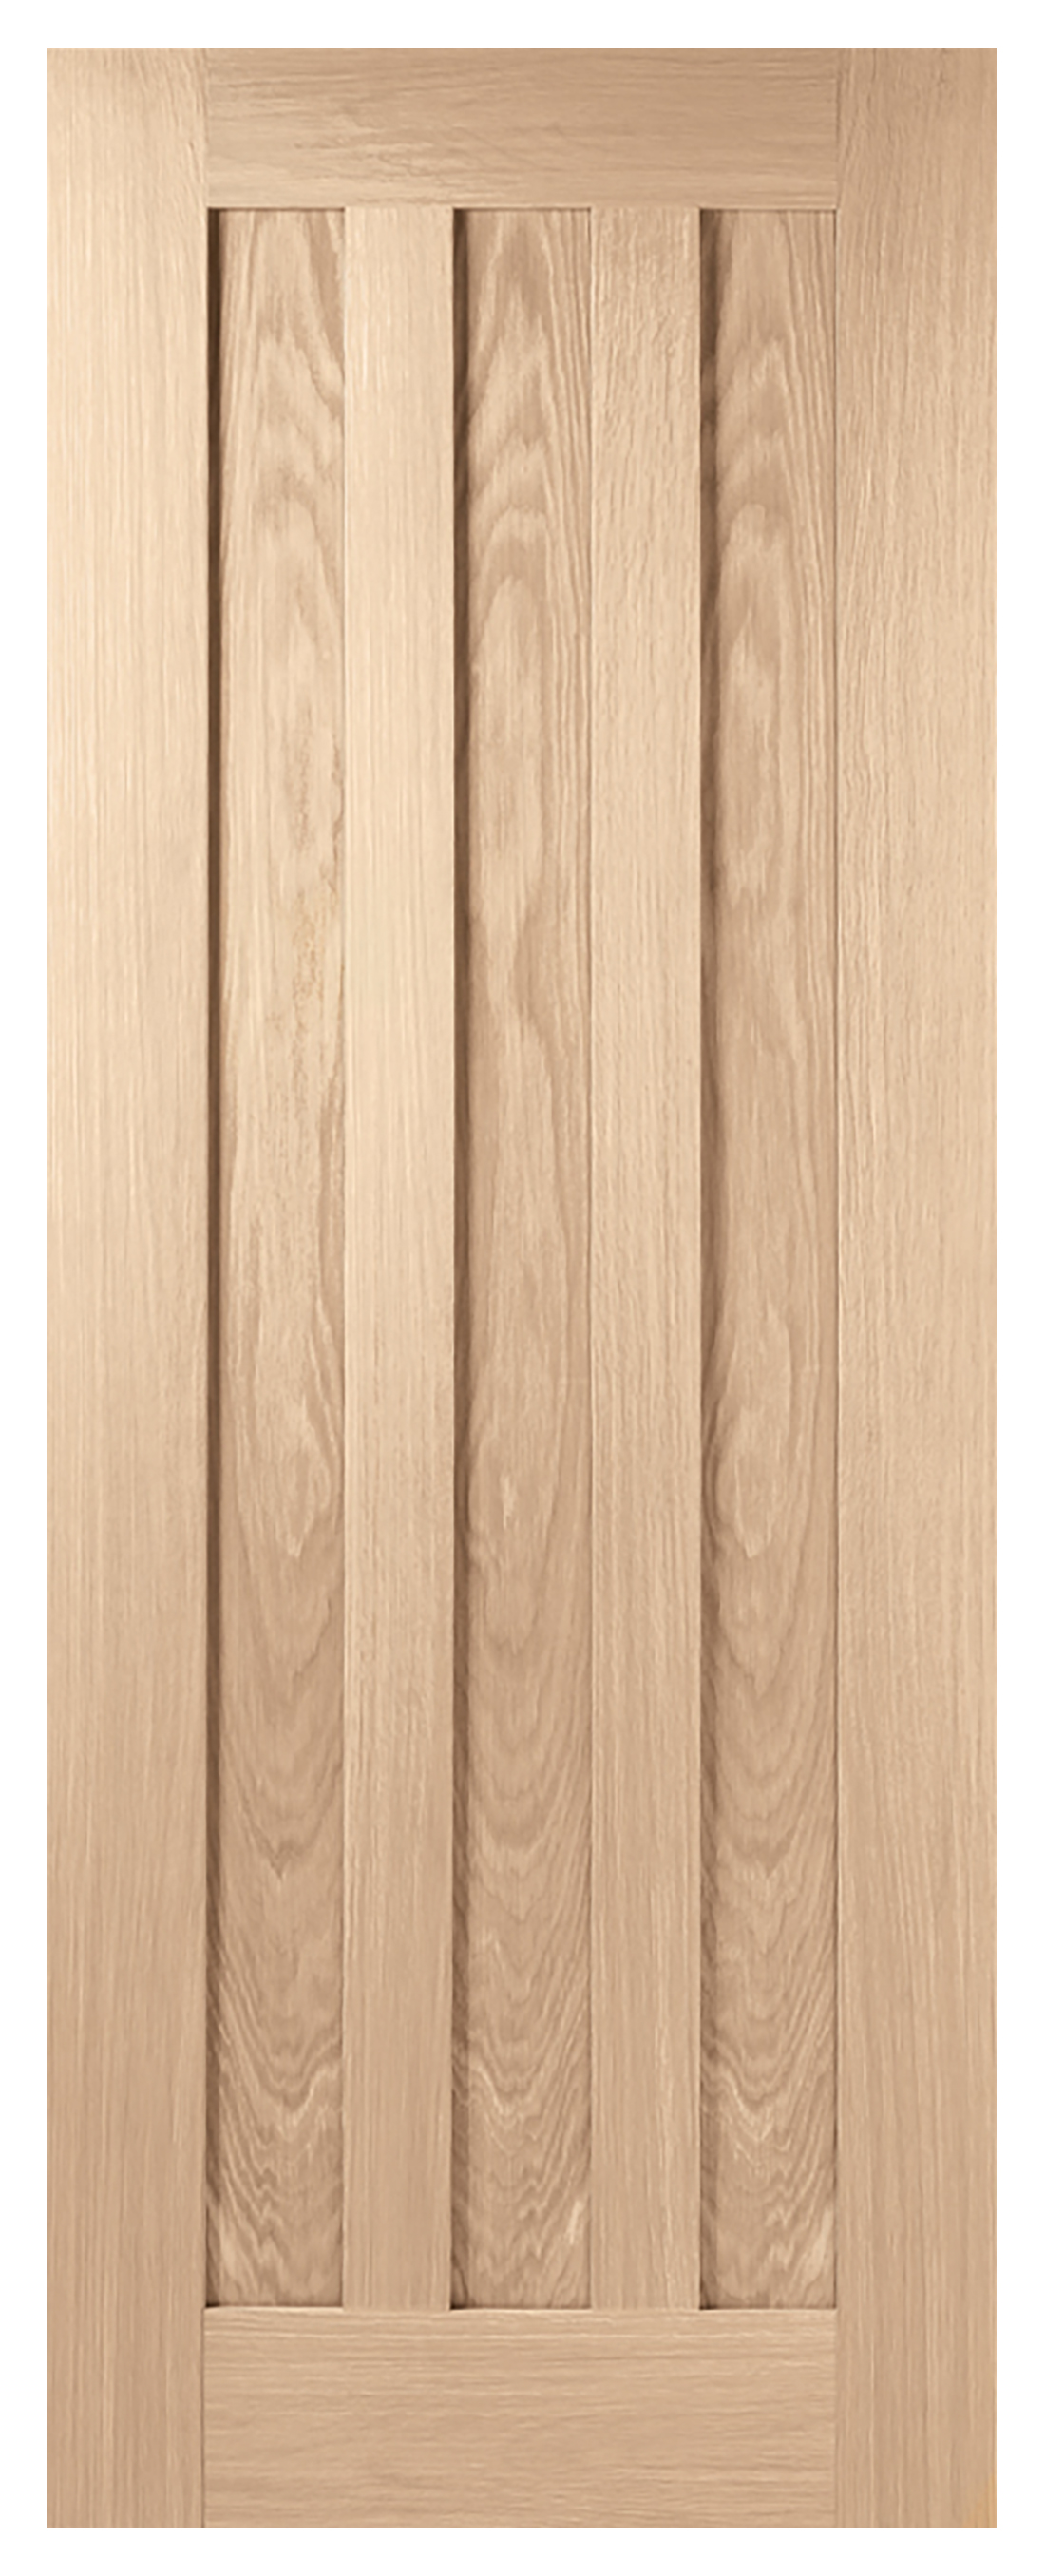 Image of LPD Internal Idaho 3 Panel Pre-Finished Oak Solid Core Door - 826 x 2040mm